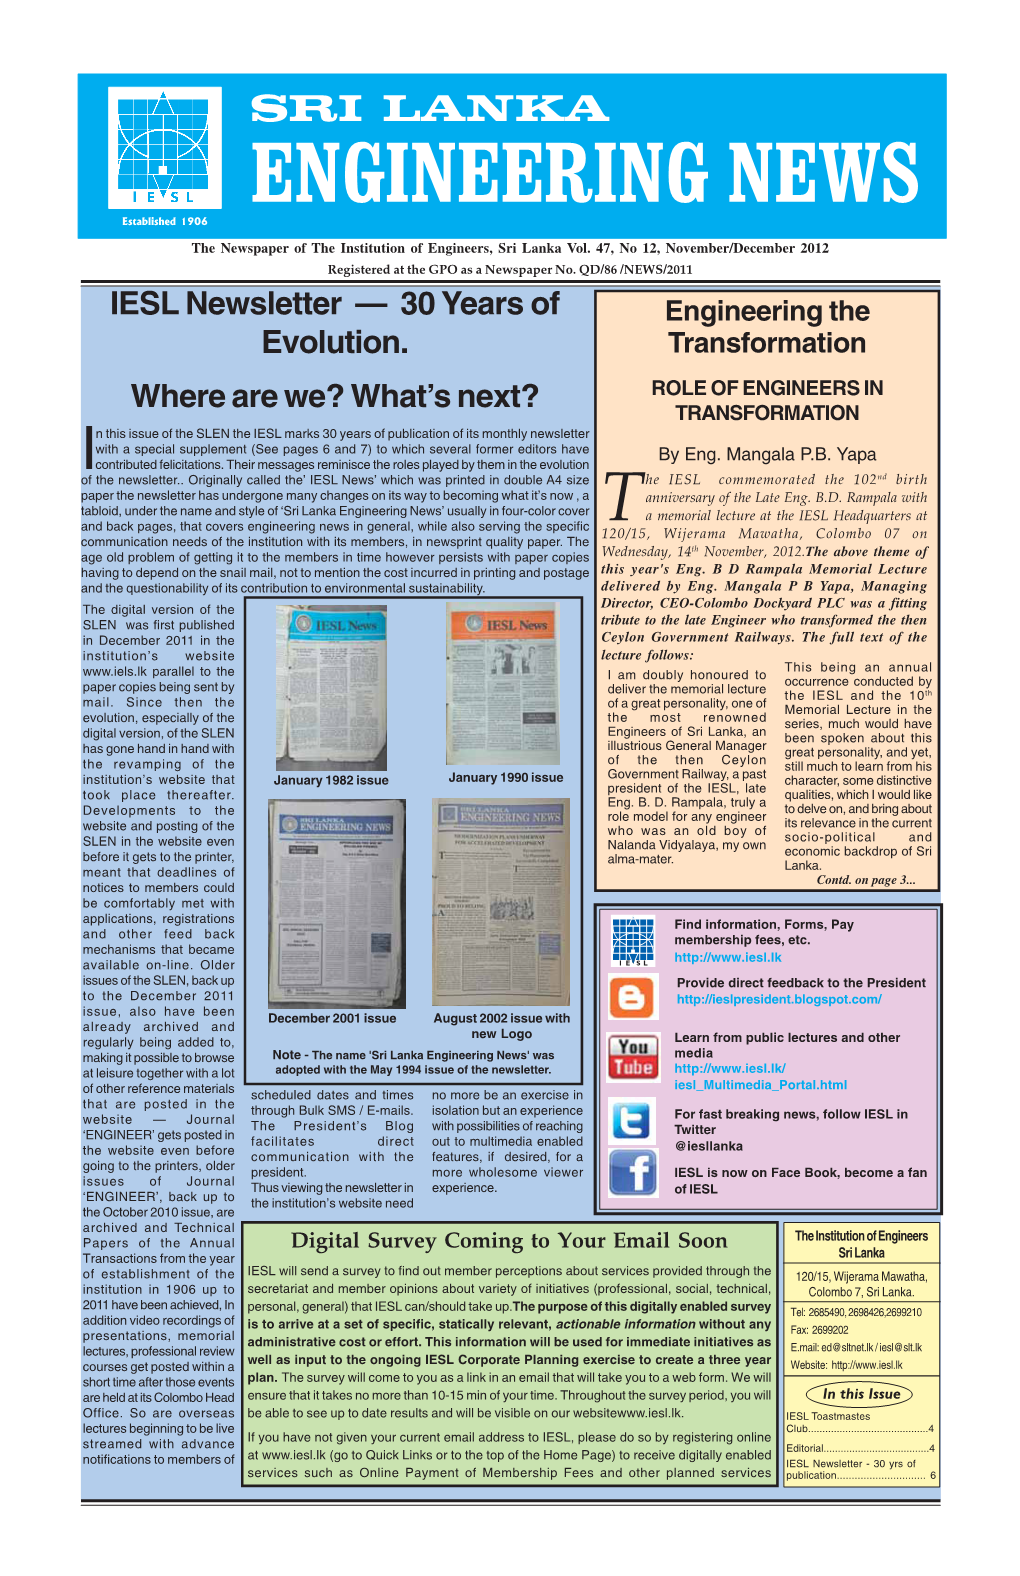 ENGINEERING NEWS Established 1906 the Newspaper of the Institution of Engineers, Sri Lanka Vol